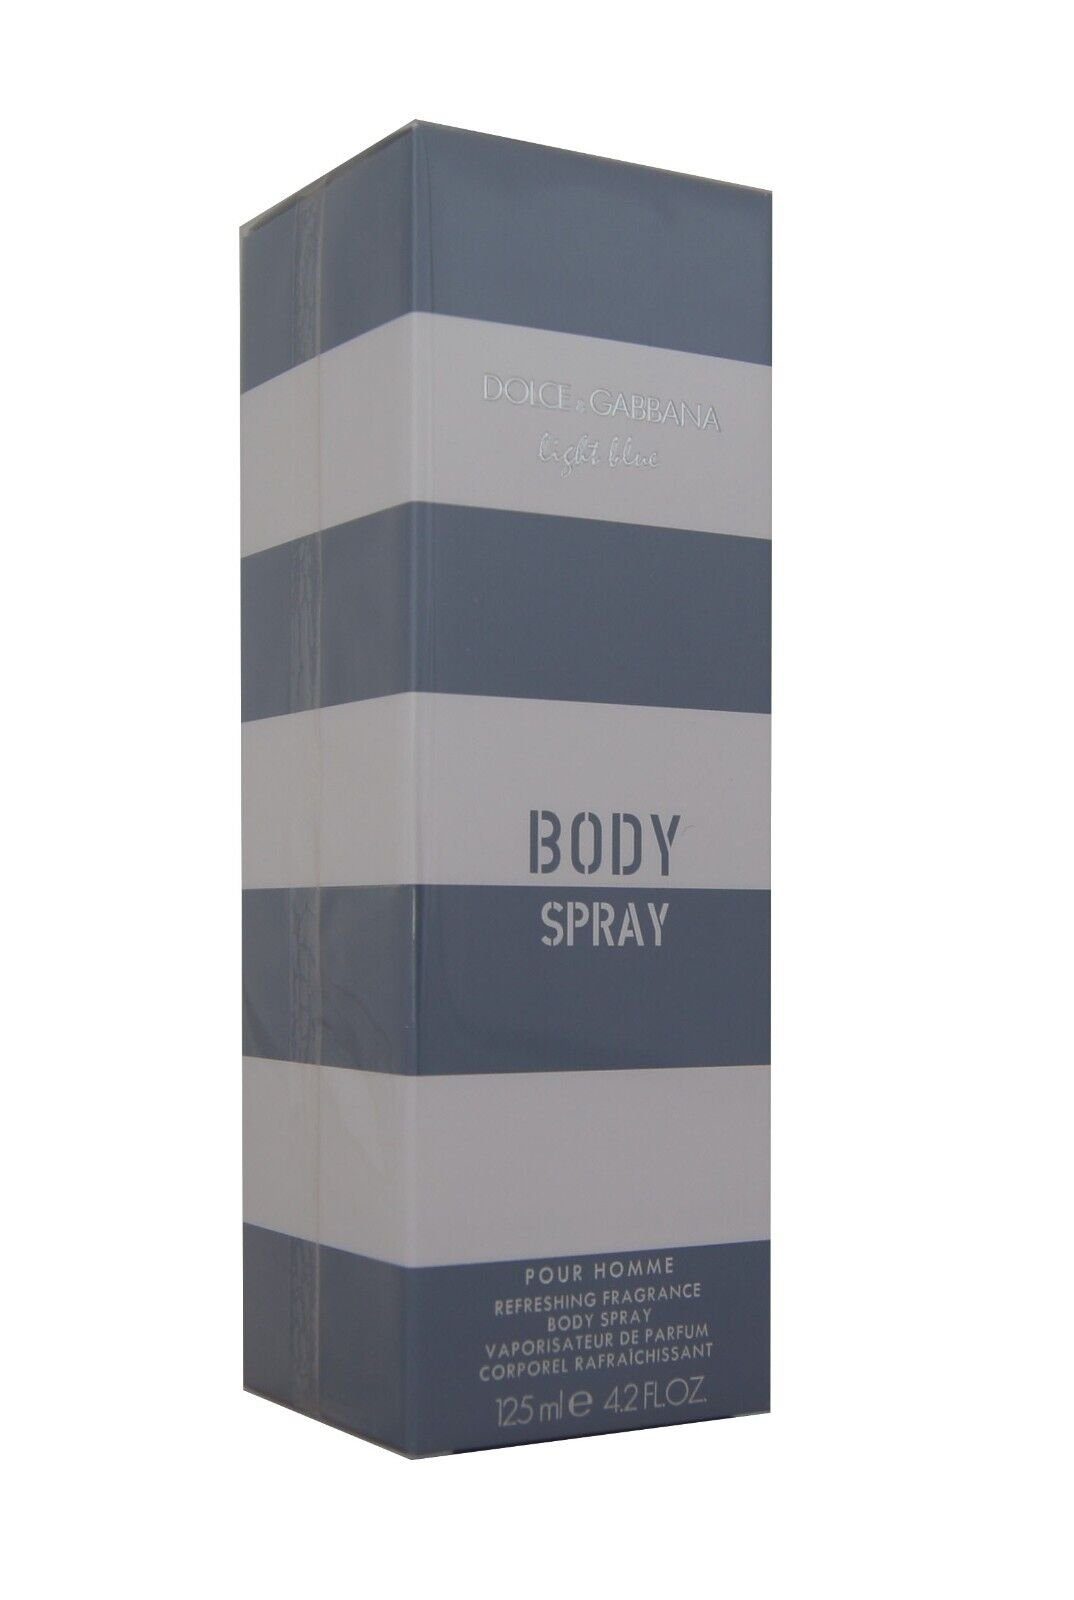 & Dolce Pour Gabbana Body 125ml. Blue Körperspray & Spray GABBANA DOLCE Homme Light